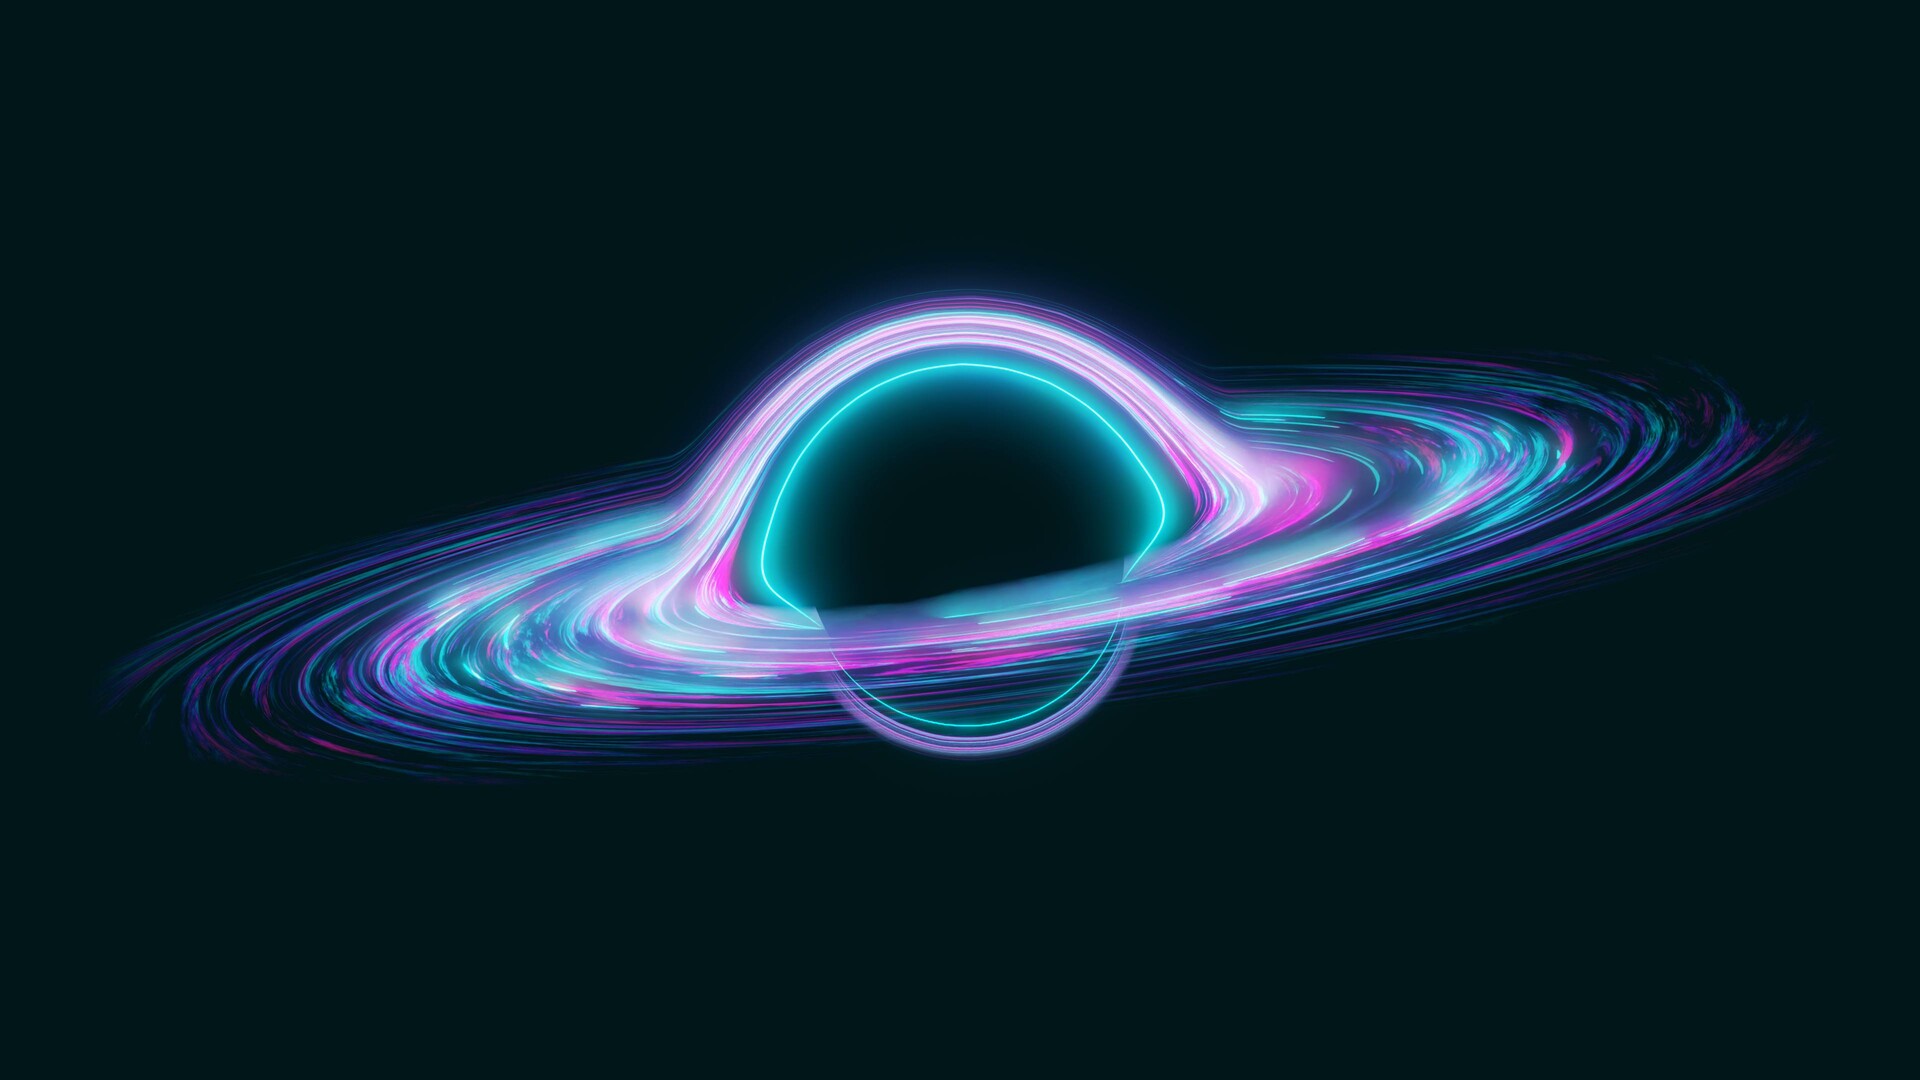 ArtStation - Neon black hole